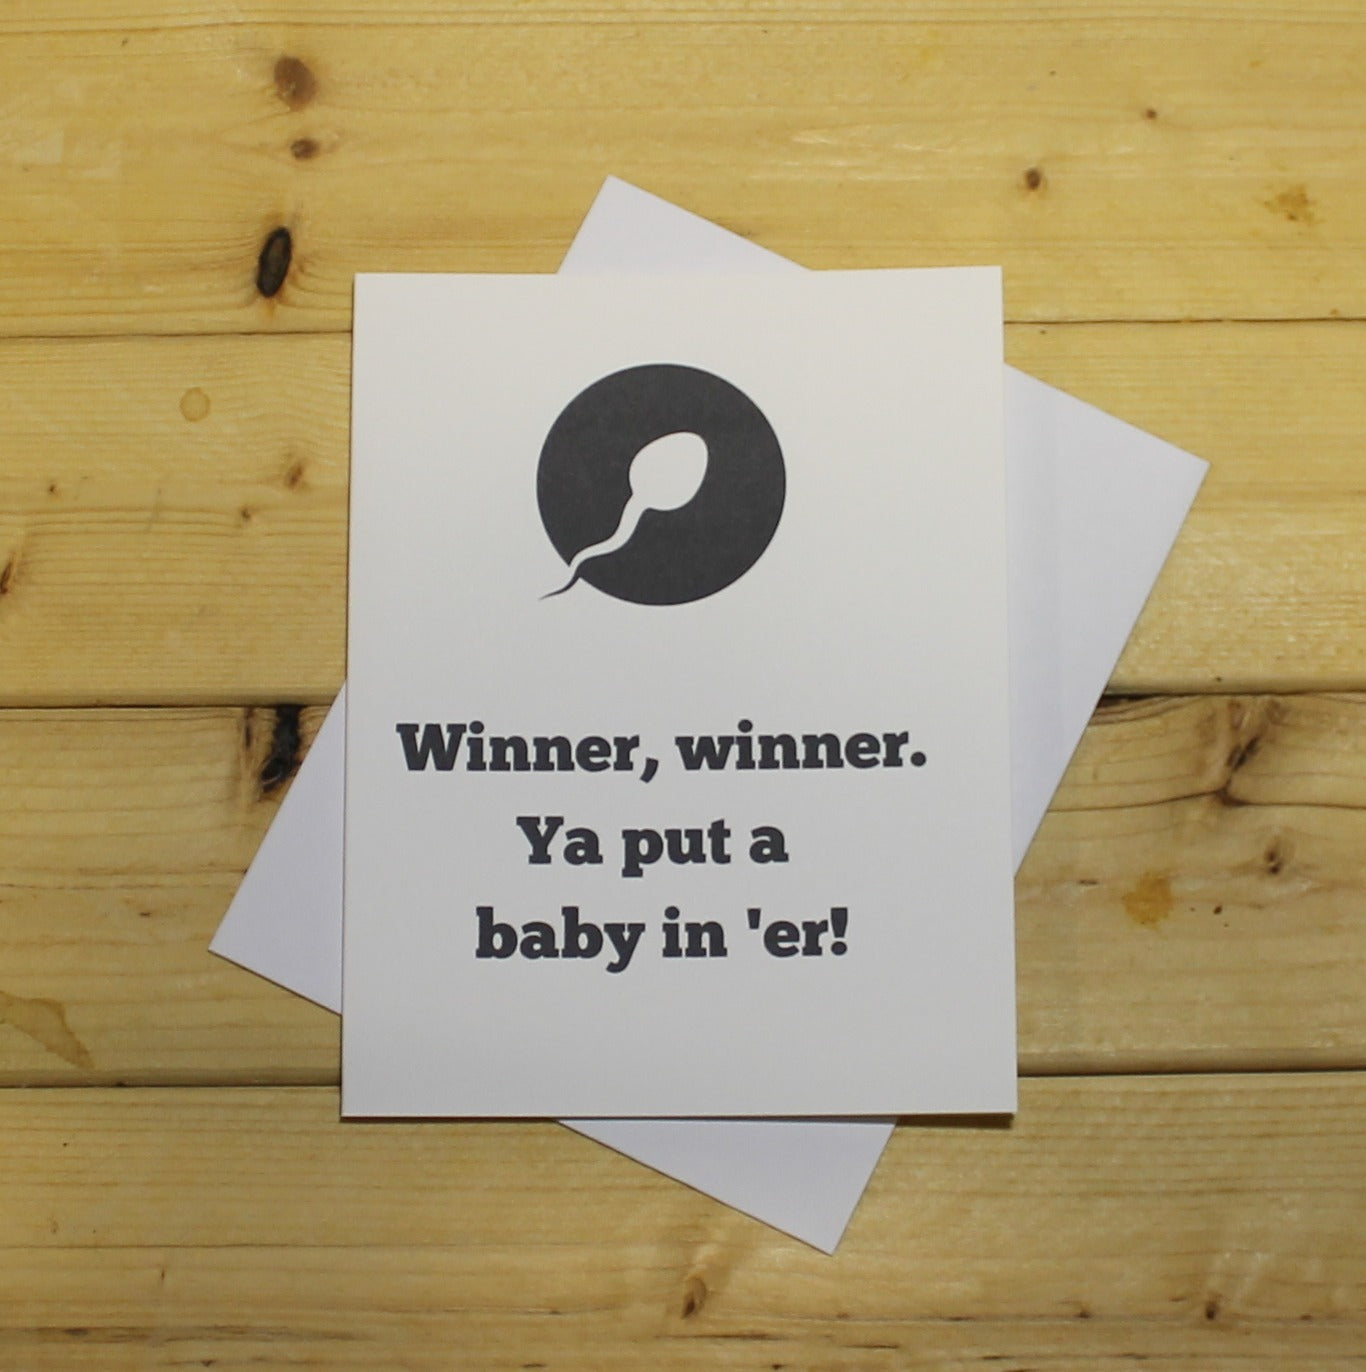 Funny Baby Card: "Winner, winner! Ya put a baby in 'er."